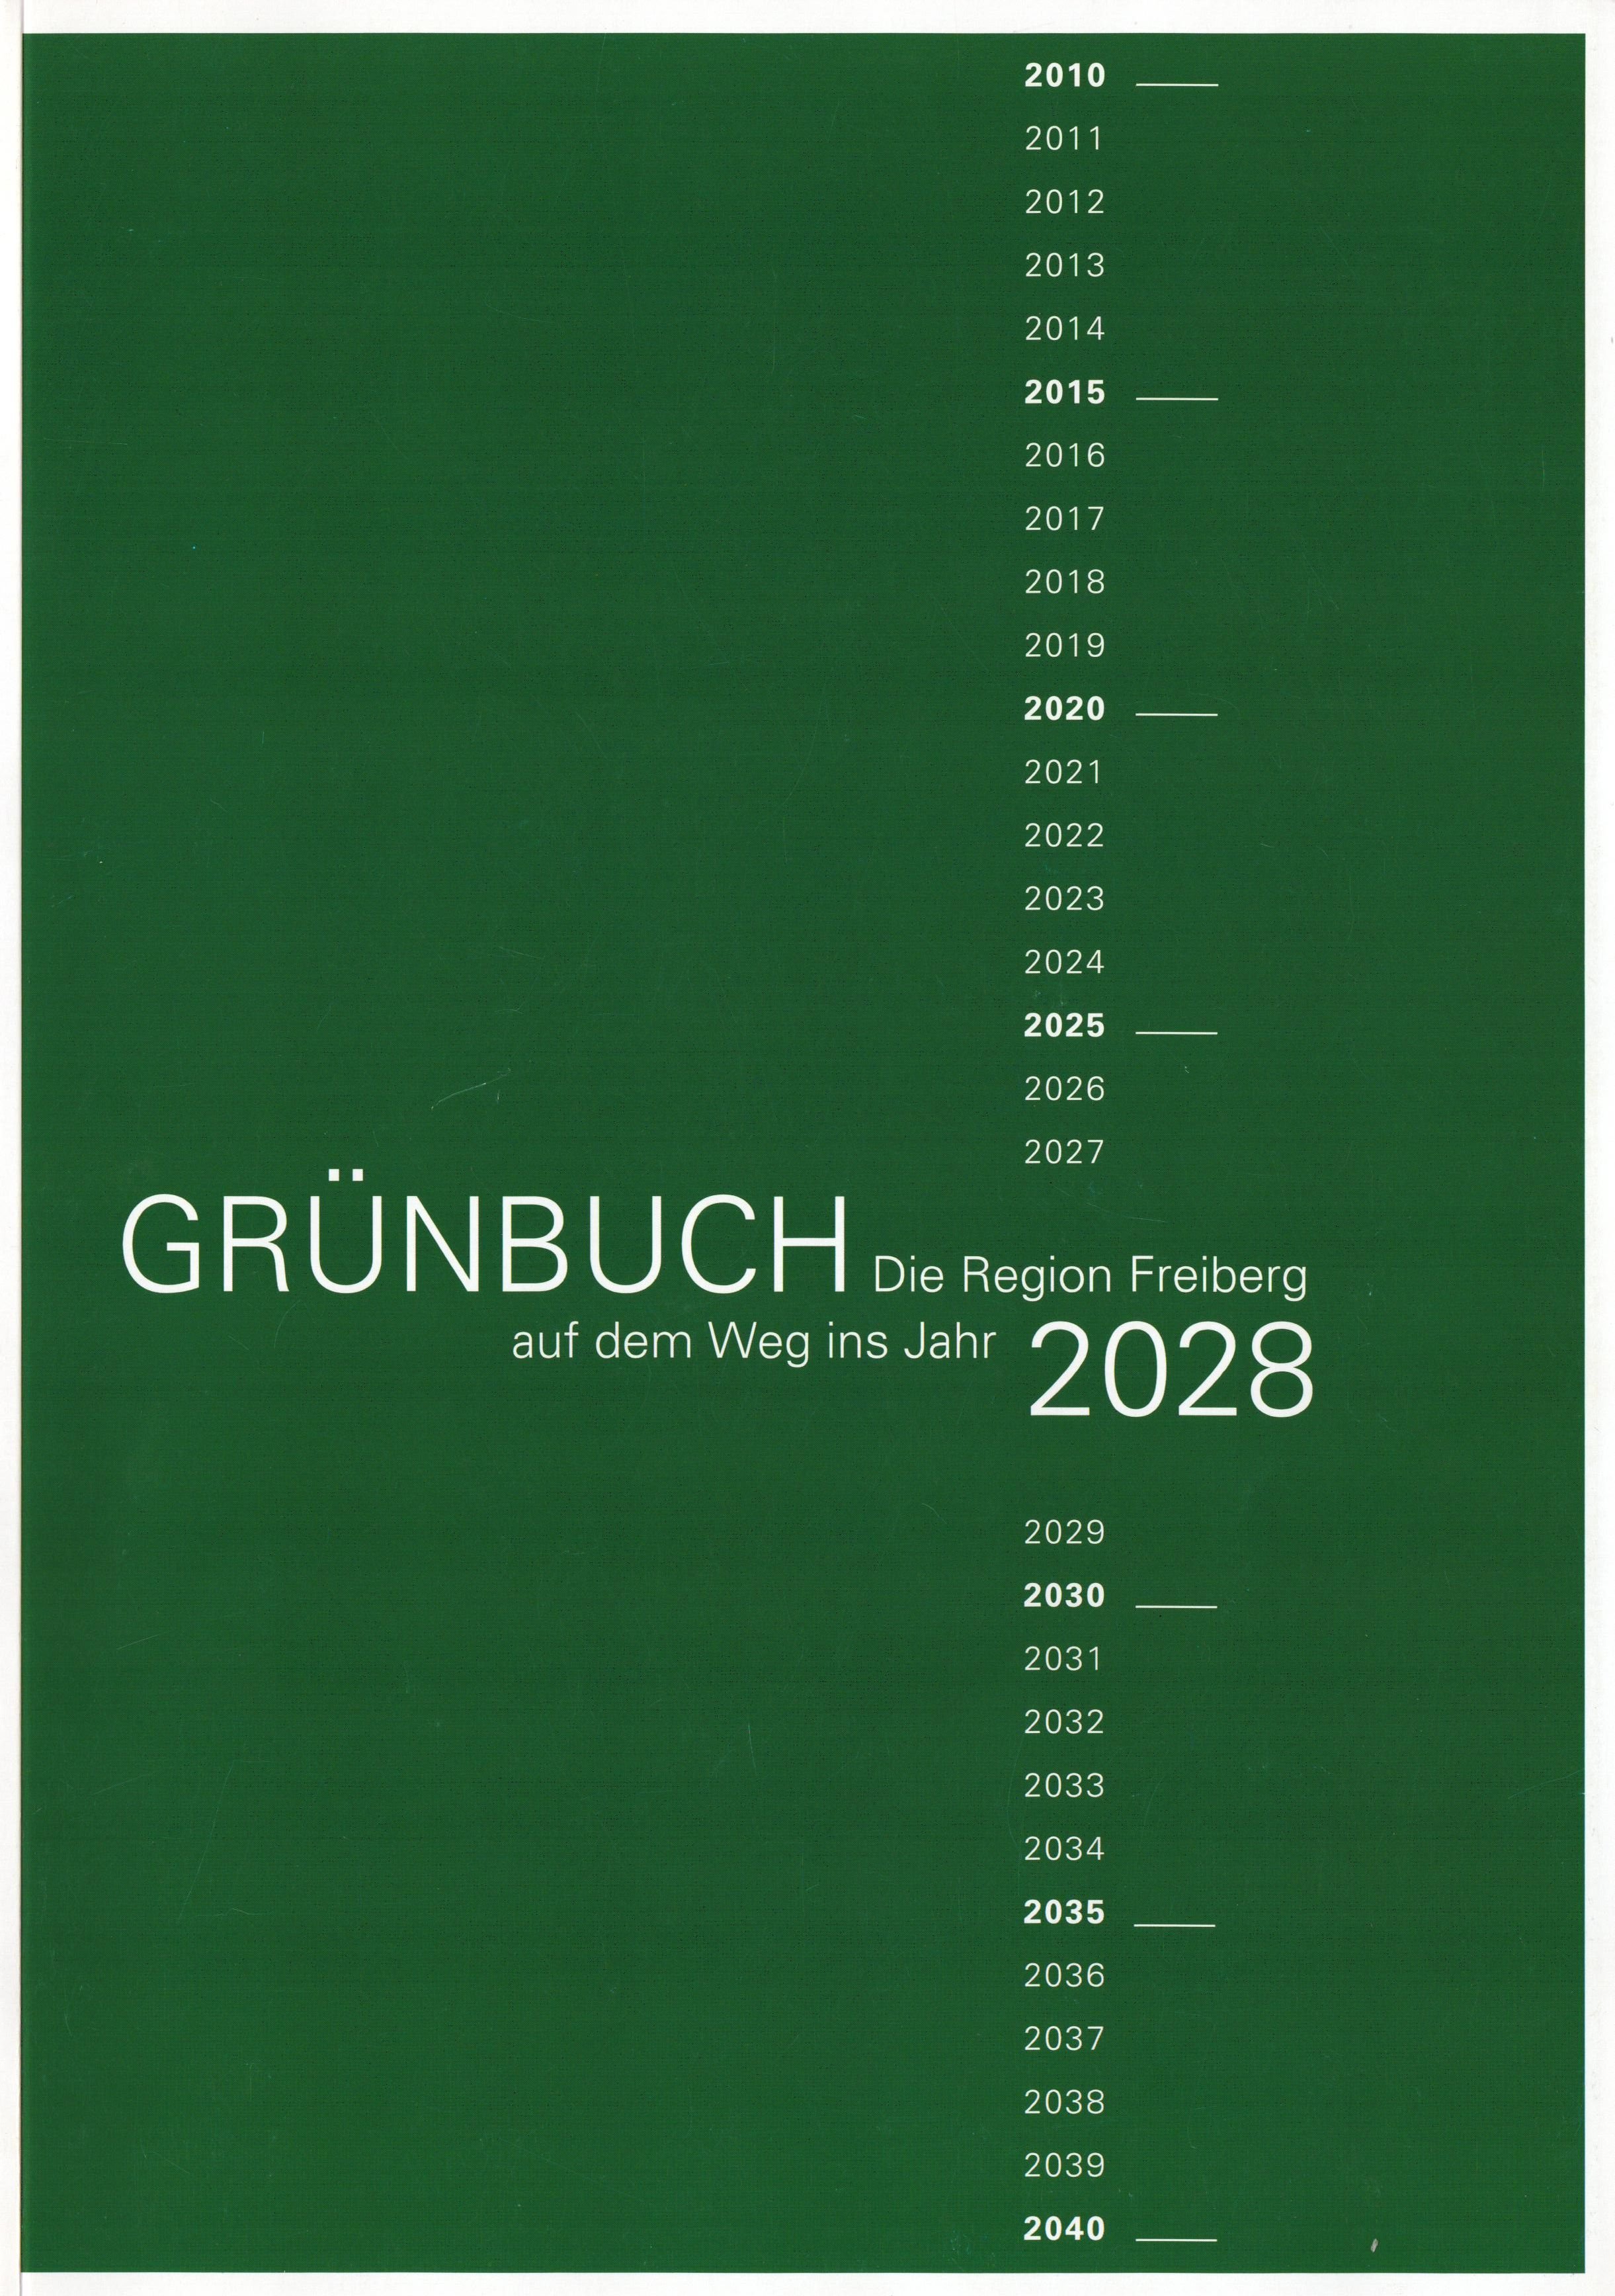 Grünbuch - Die Region Freiberg auf dem Weg ins Jahr 2028 (Archiv SAXONIA-FREIBERG-STIFTUNG CC BY-NC-SA)